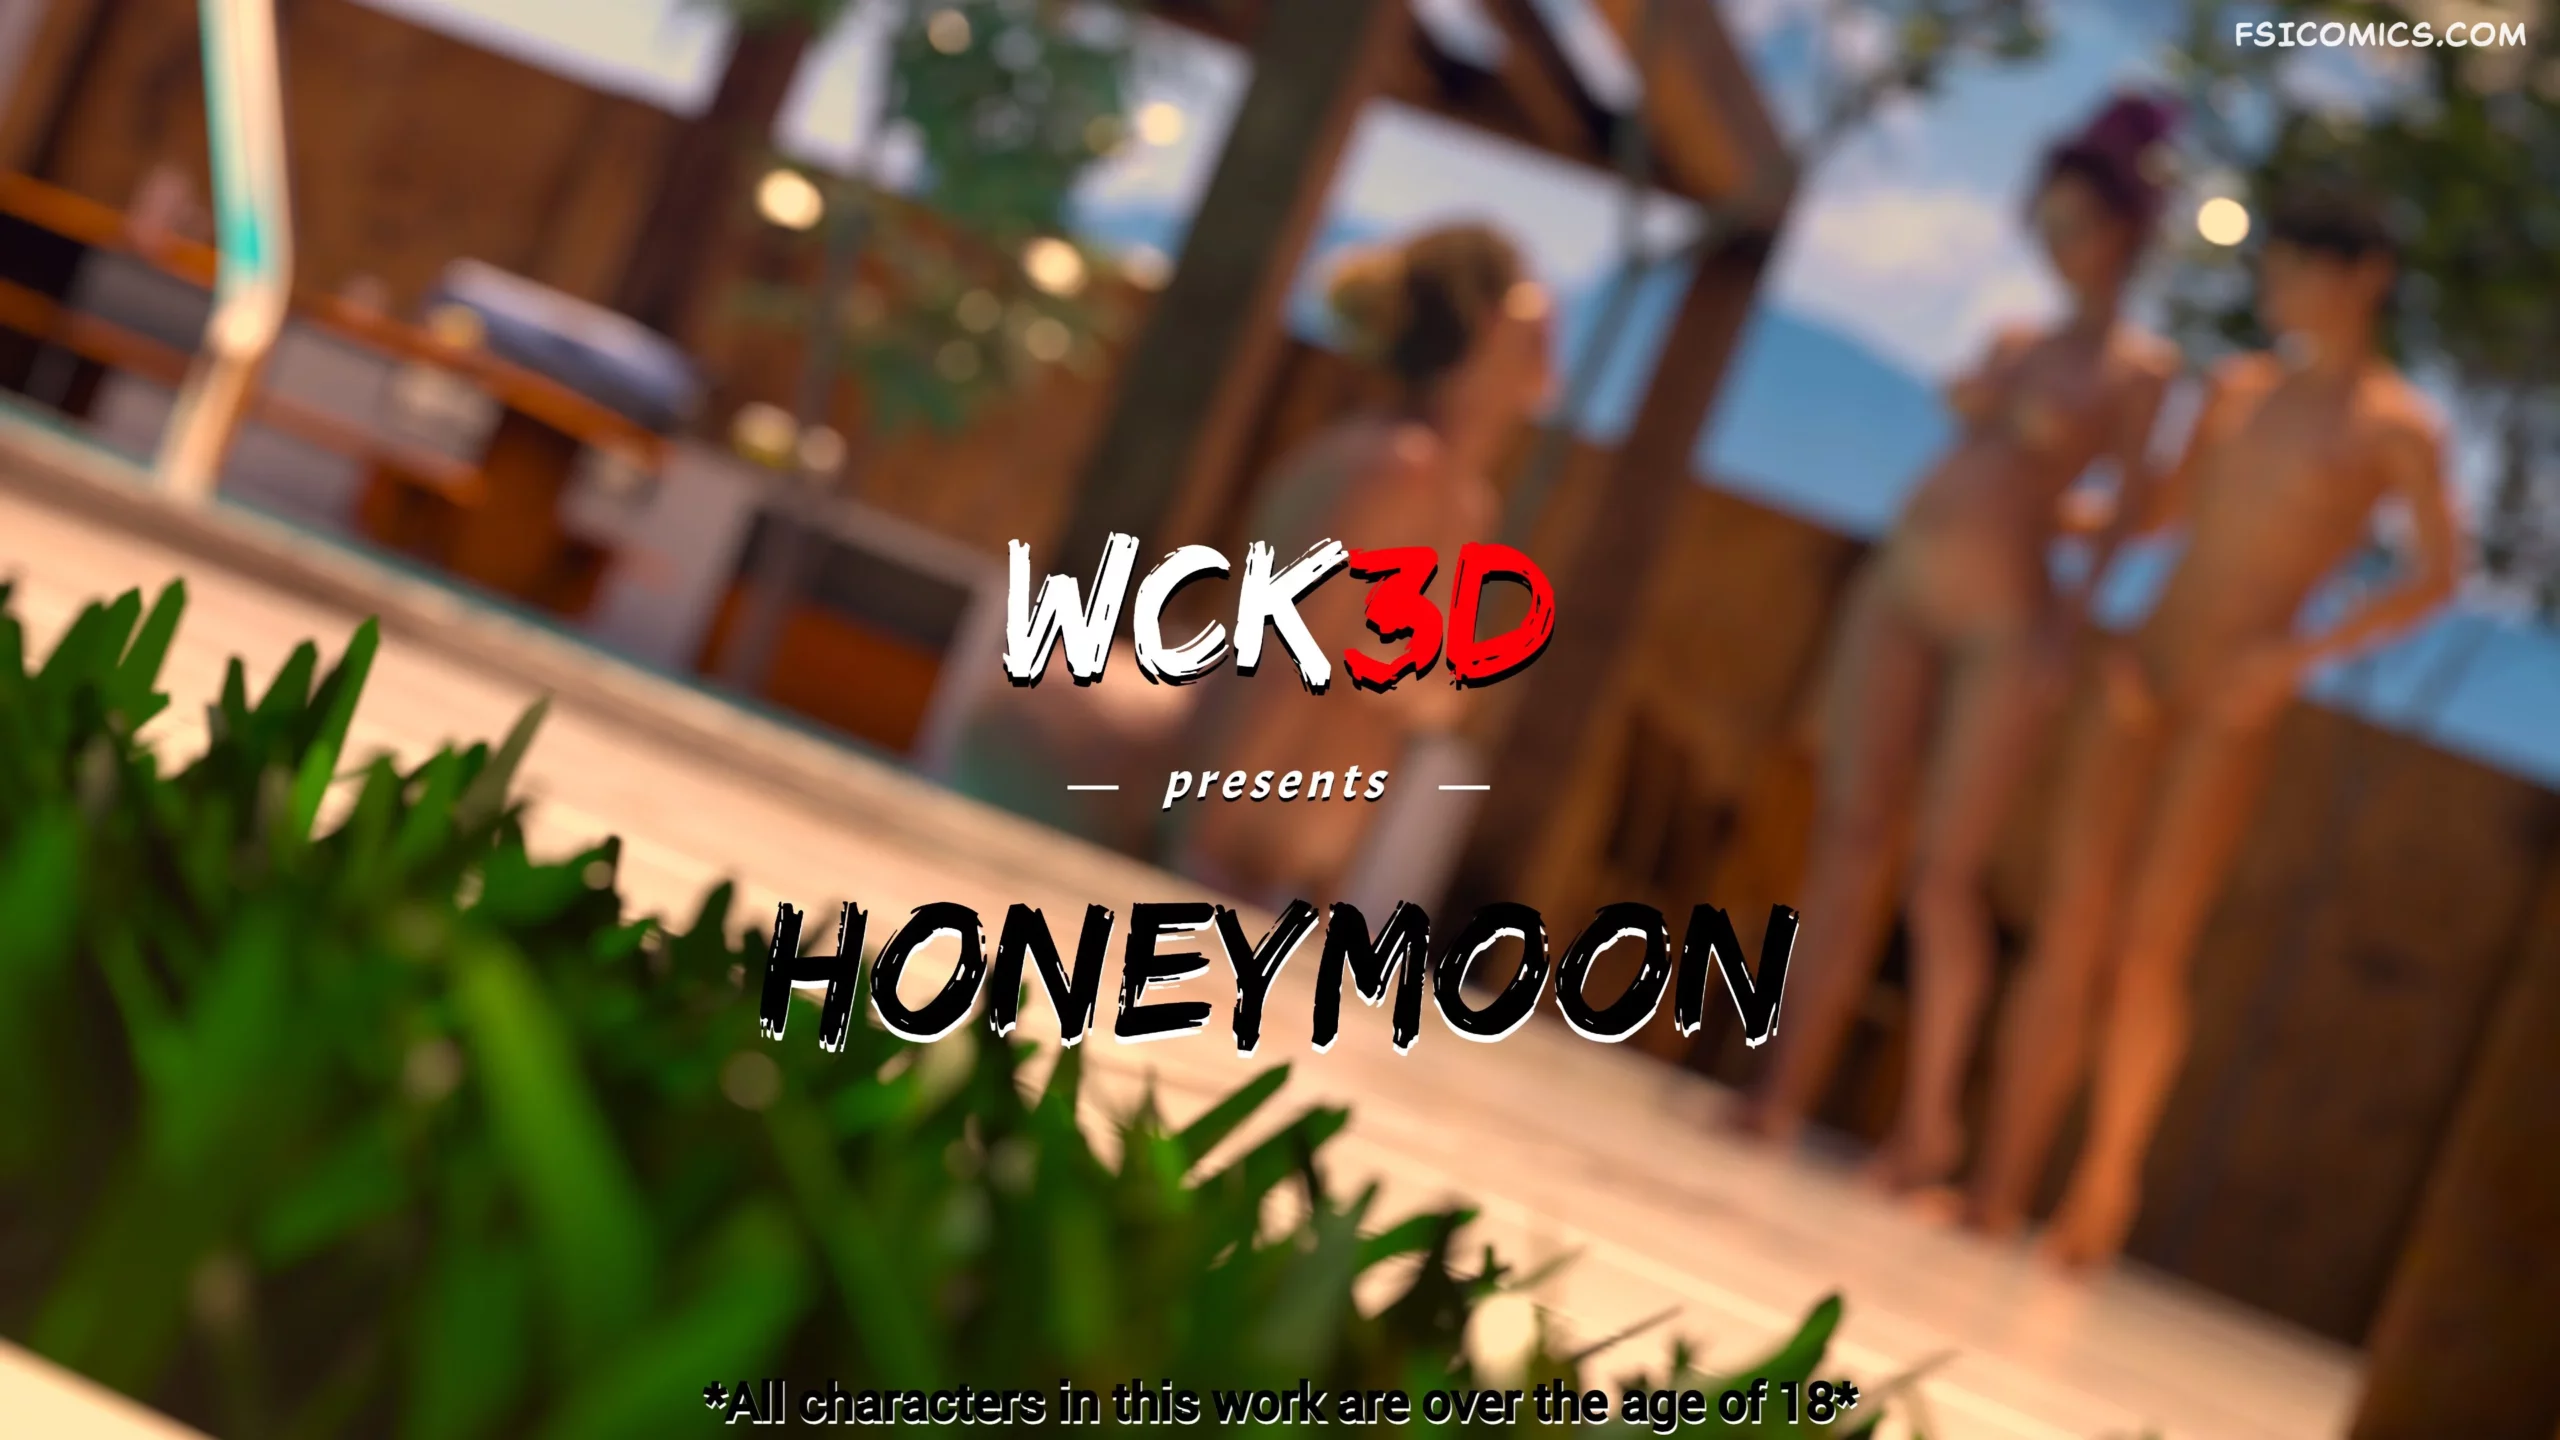 Between Us - Honeymoon - WCK3D - 65 - FSIComics